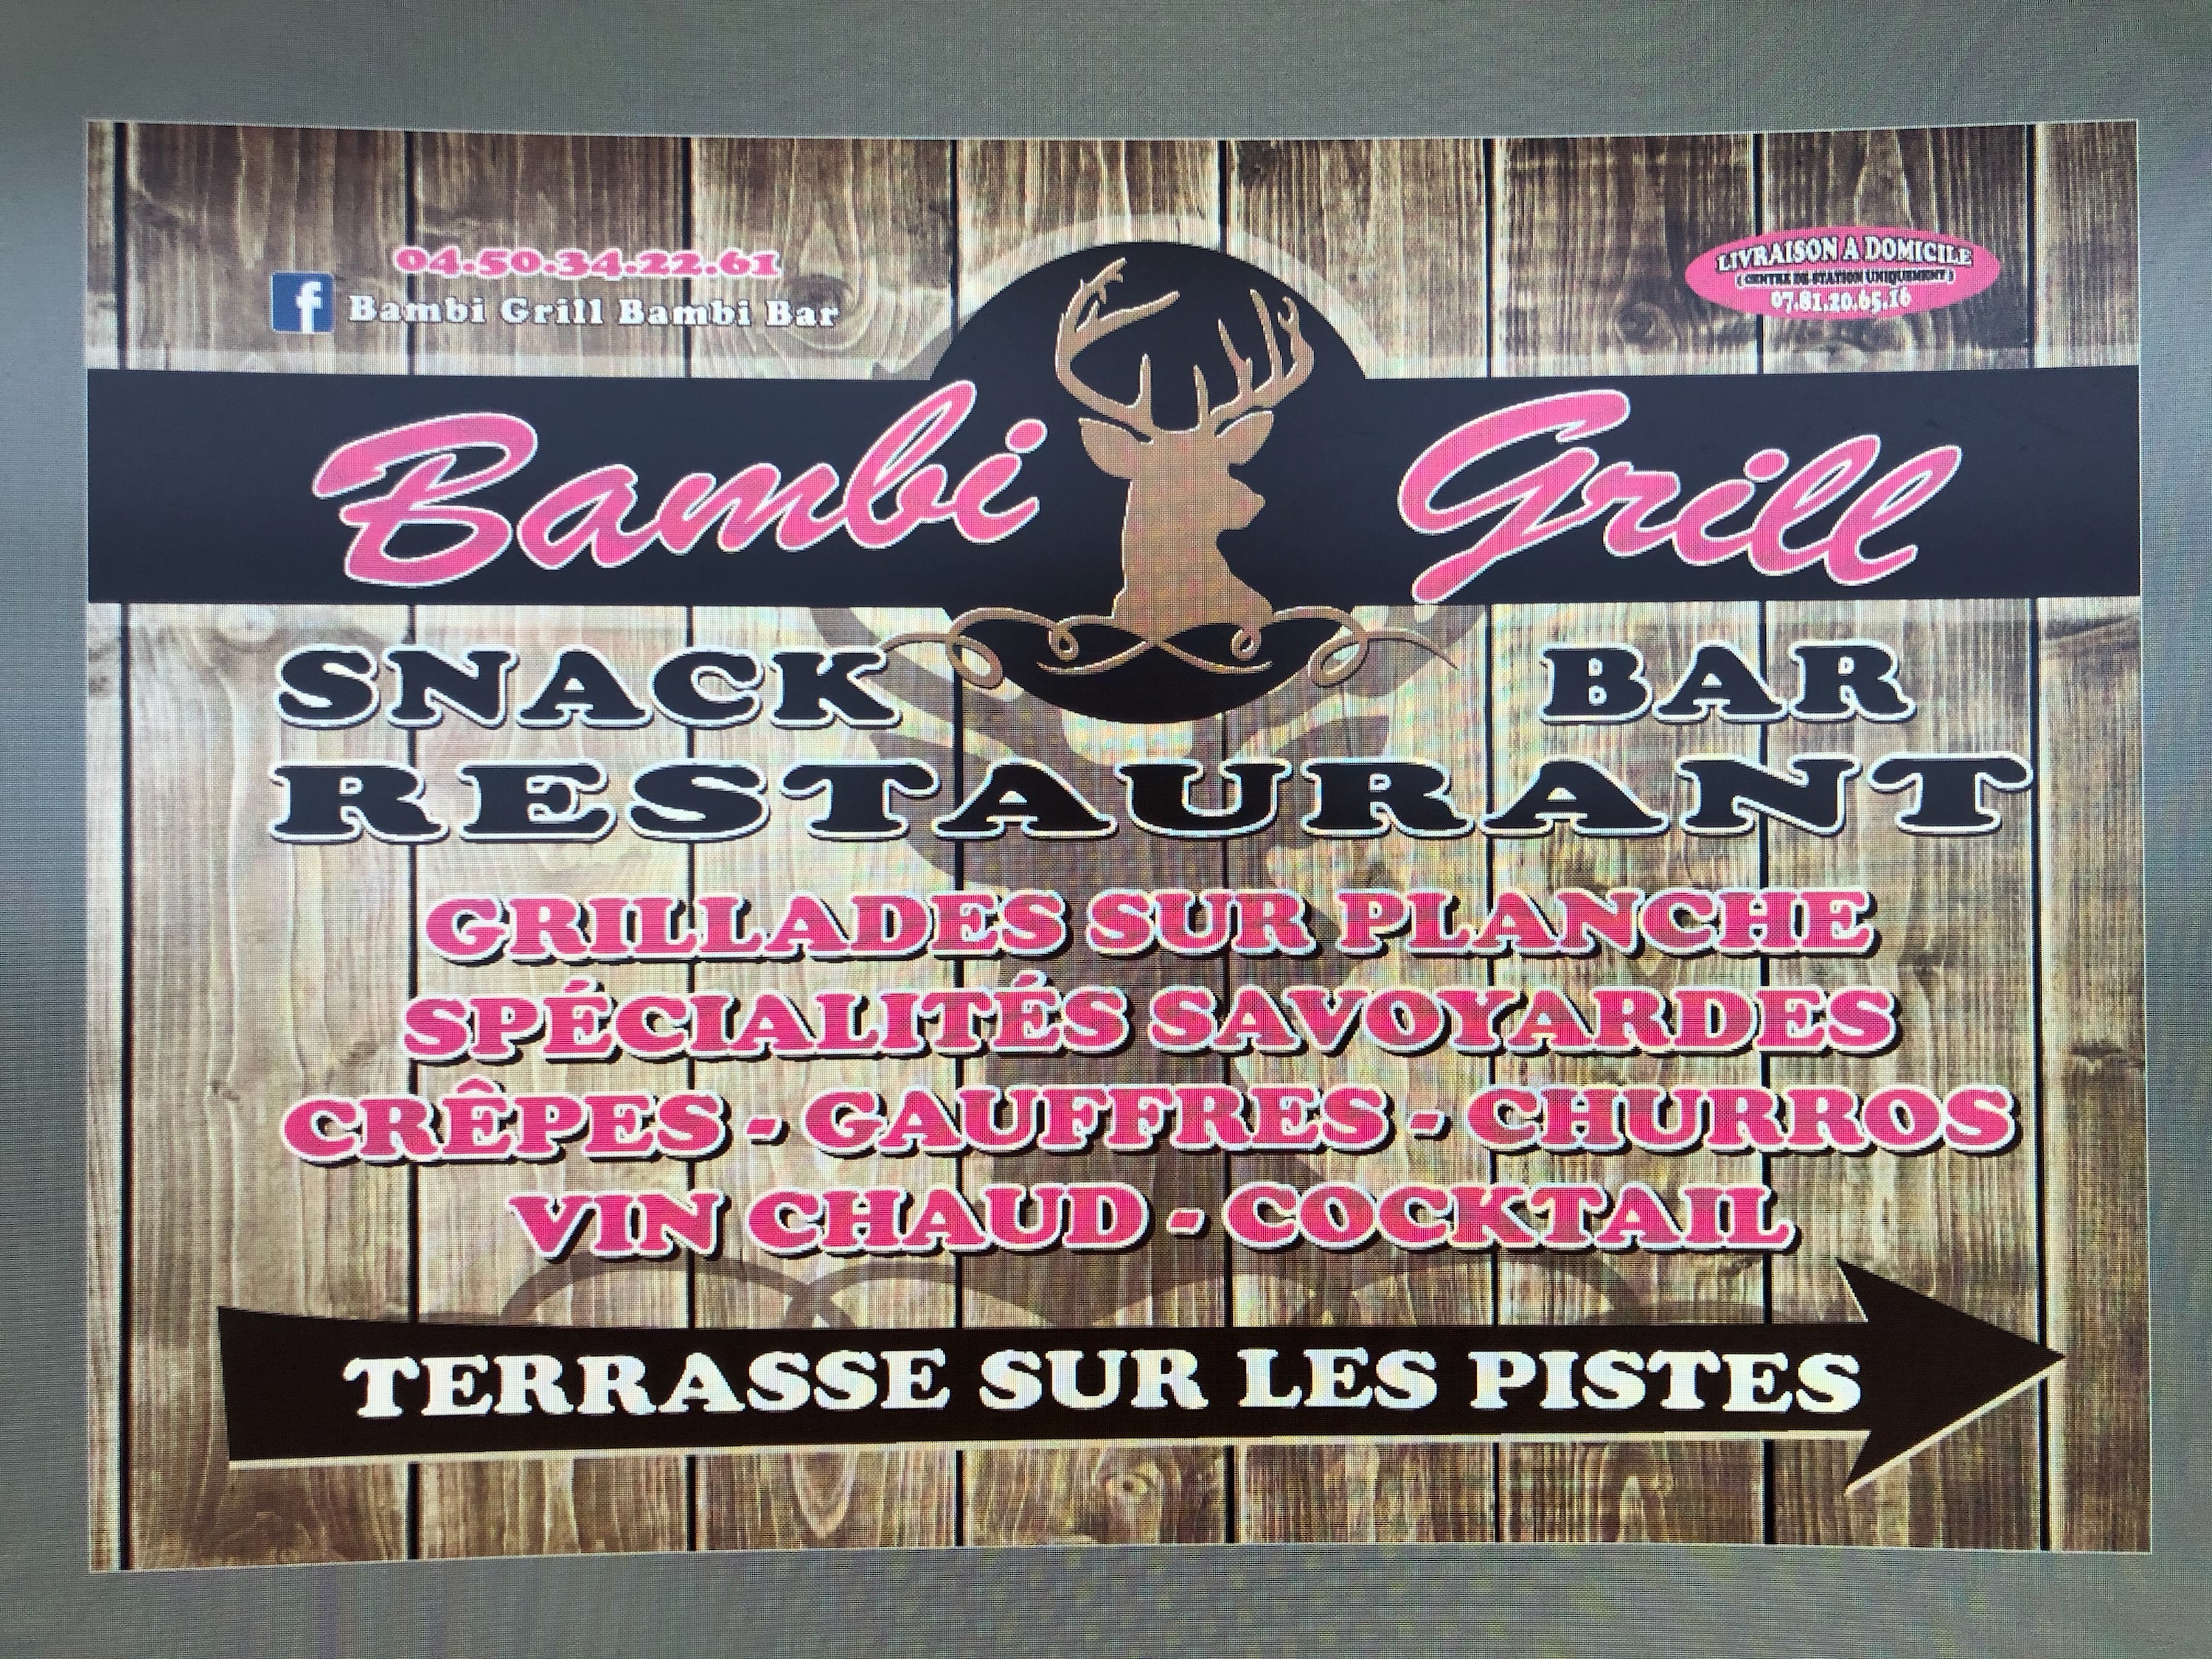 Bambi Grill Bambi Bar Restaurant